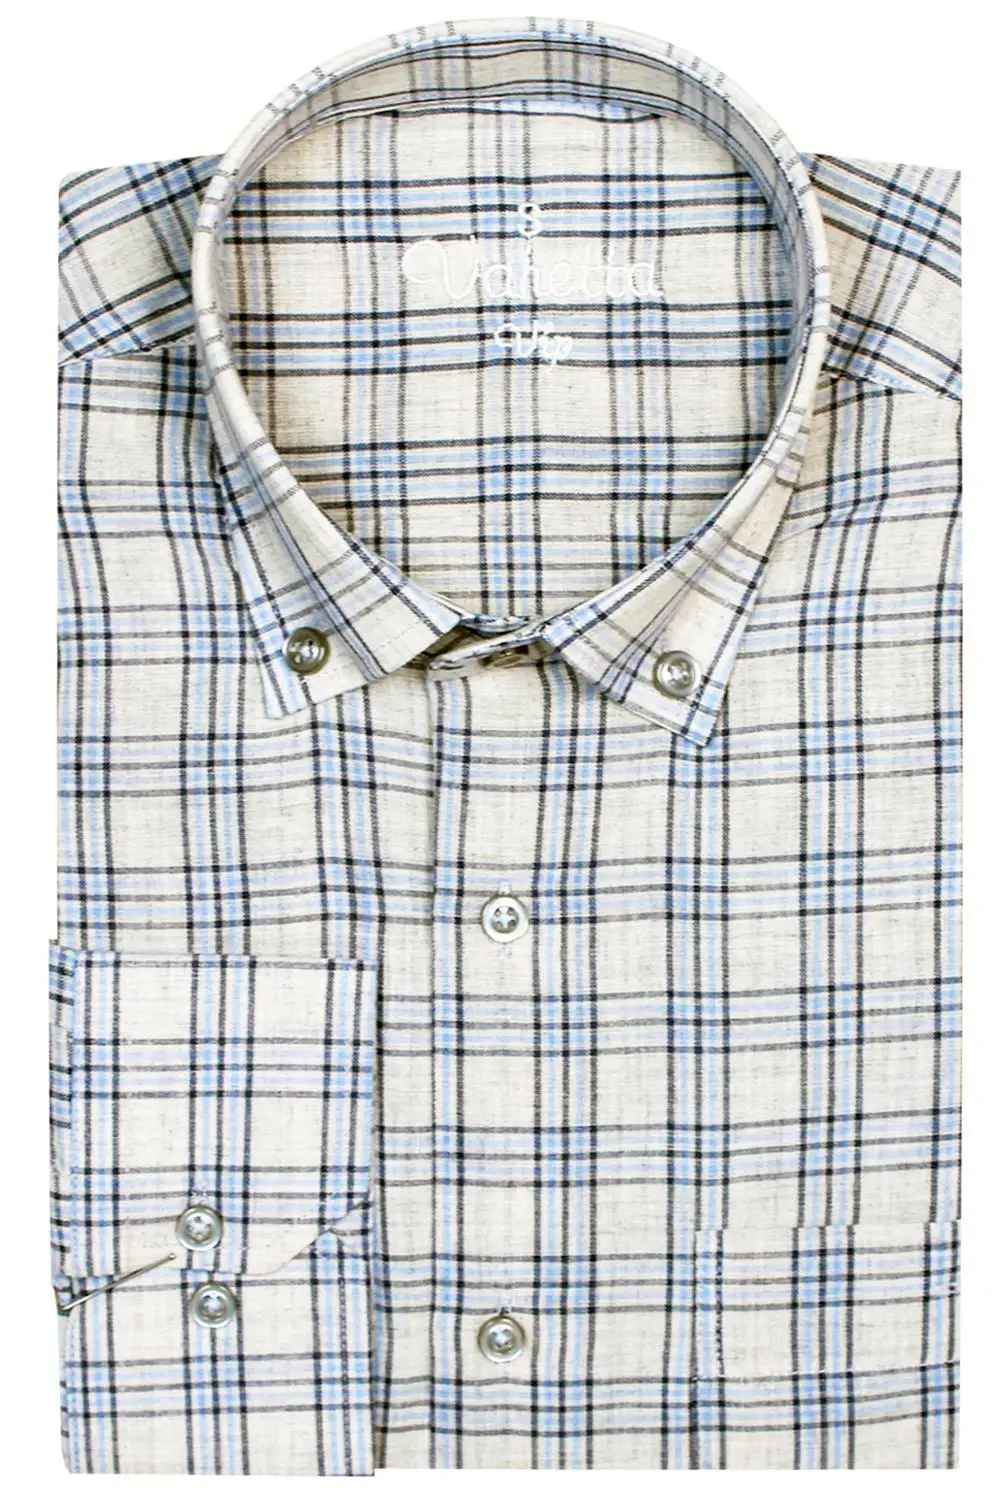 

Broadcloth Cotton Shirt Men Regular Plaid turn-down collar Men Shirt Full Sleeve Shirts For Men Fashion Casual by Varetta Turkey